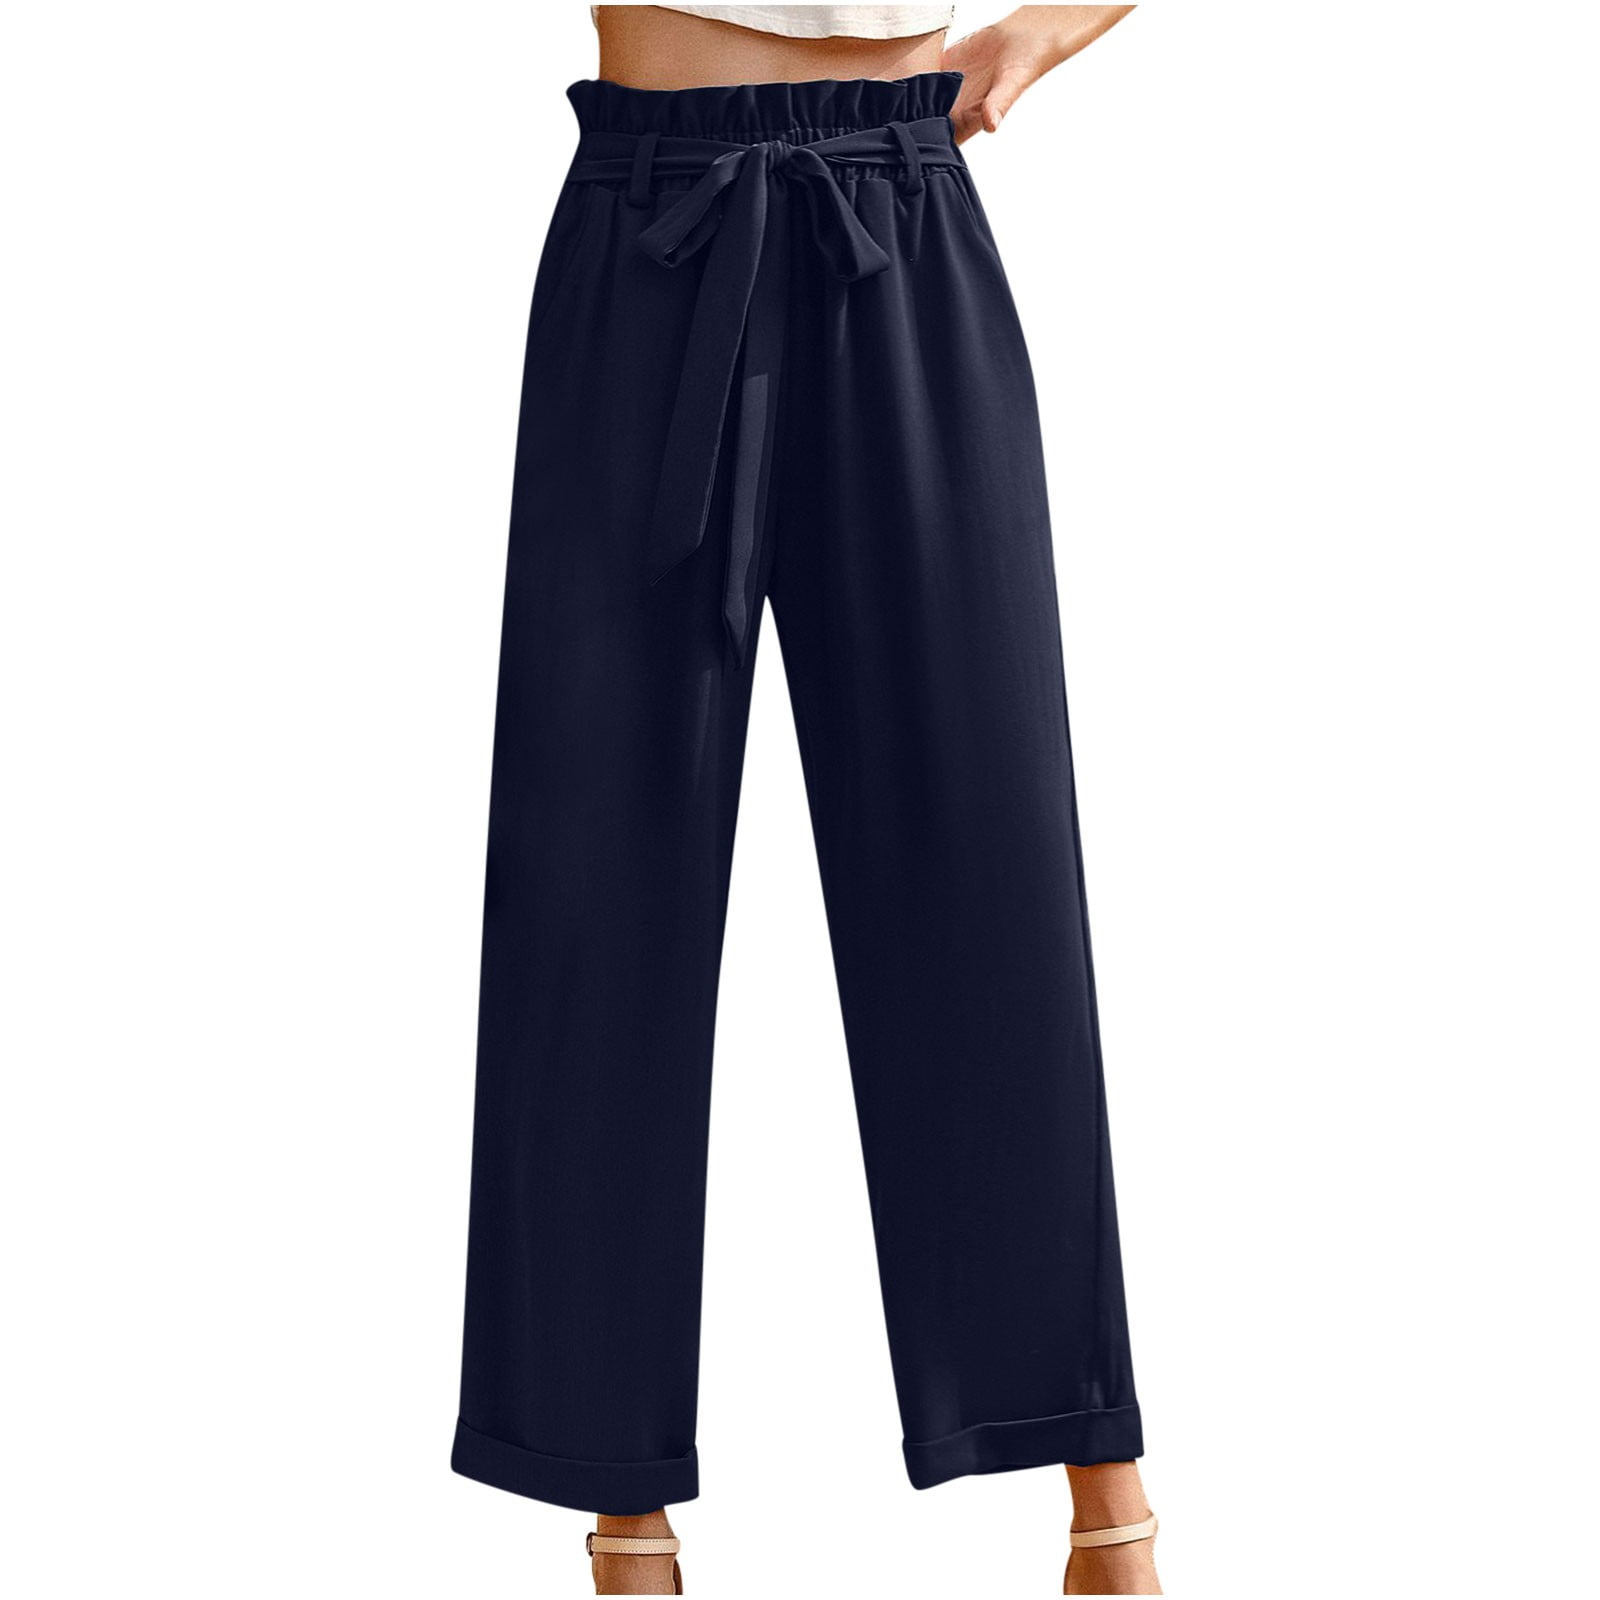 Olyvenn Fashion Women Plus Size Drawstring Summer Casual Solid Elastic  Waist Full Length Long Pants Pocket Loose Pants Female Fashion Black 8